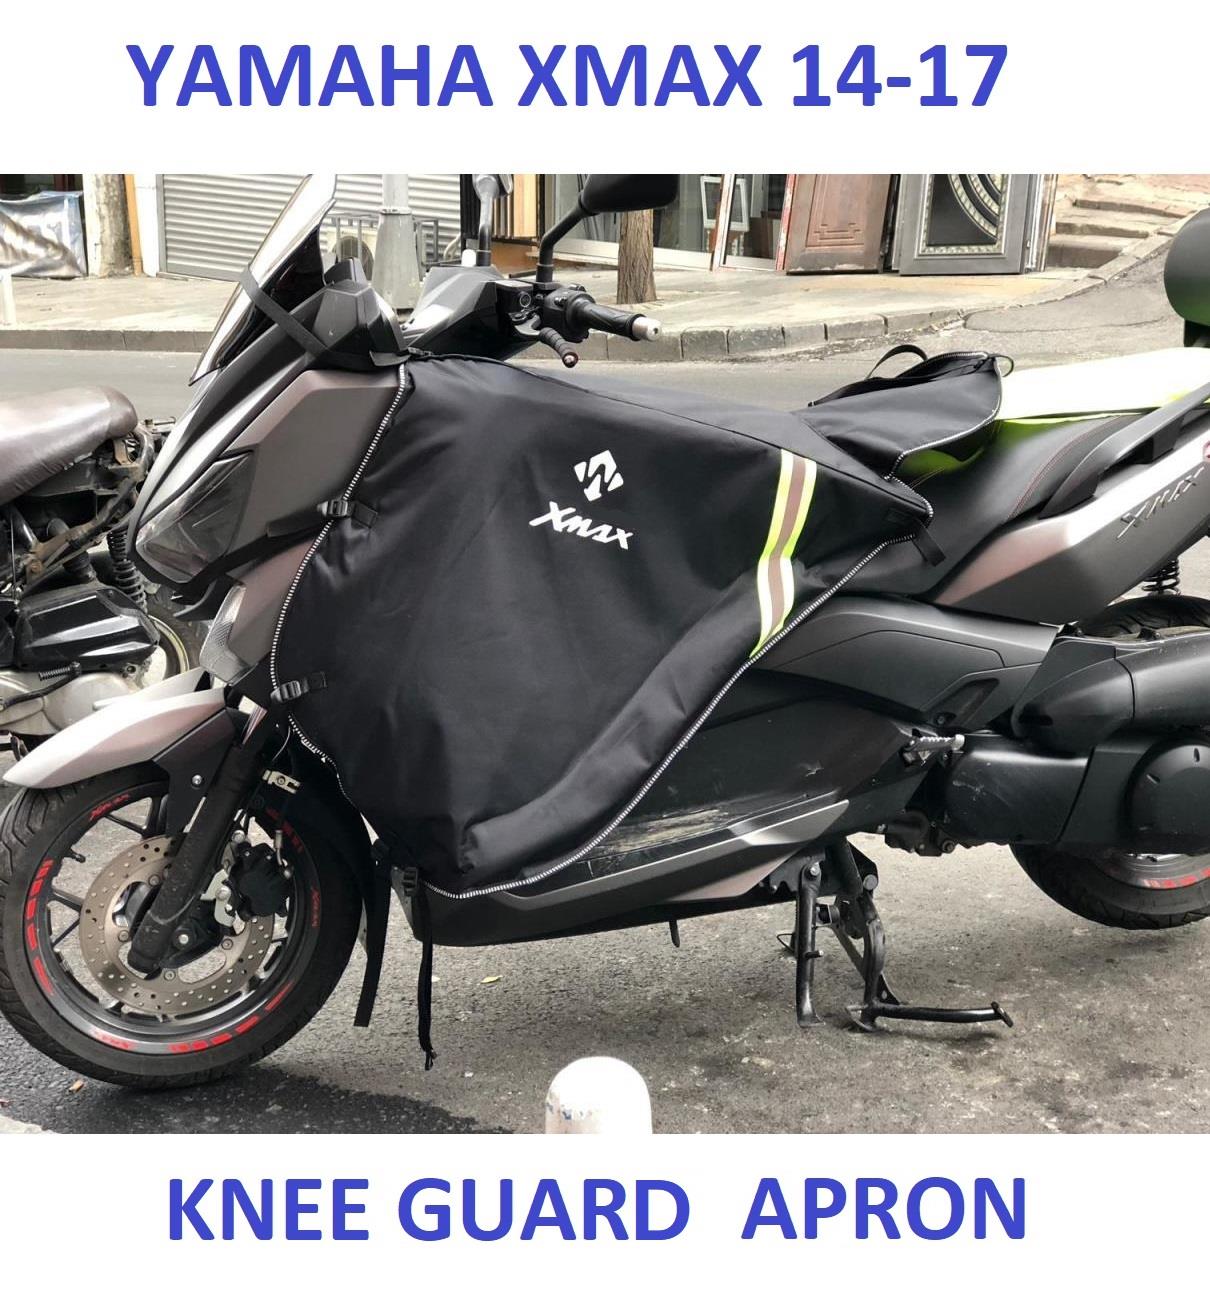 Yamaha XMAX 250 Heavy Duty Apron 14-17 Rain Covers Leg Knee Protector Warmer